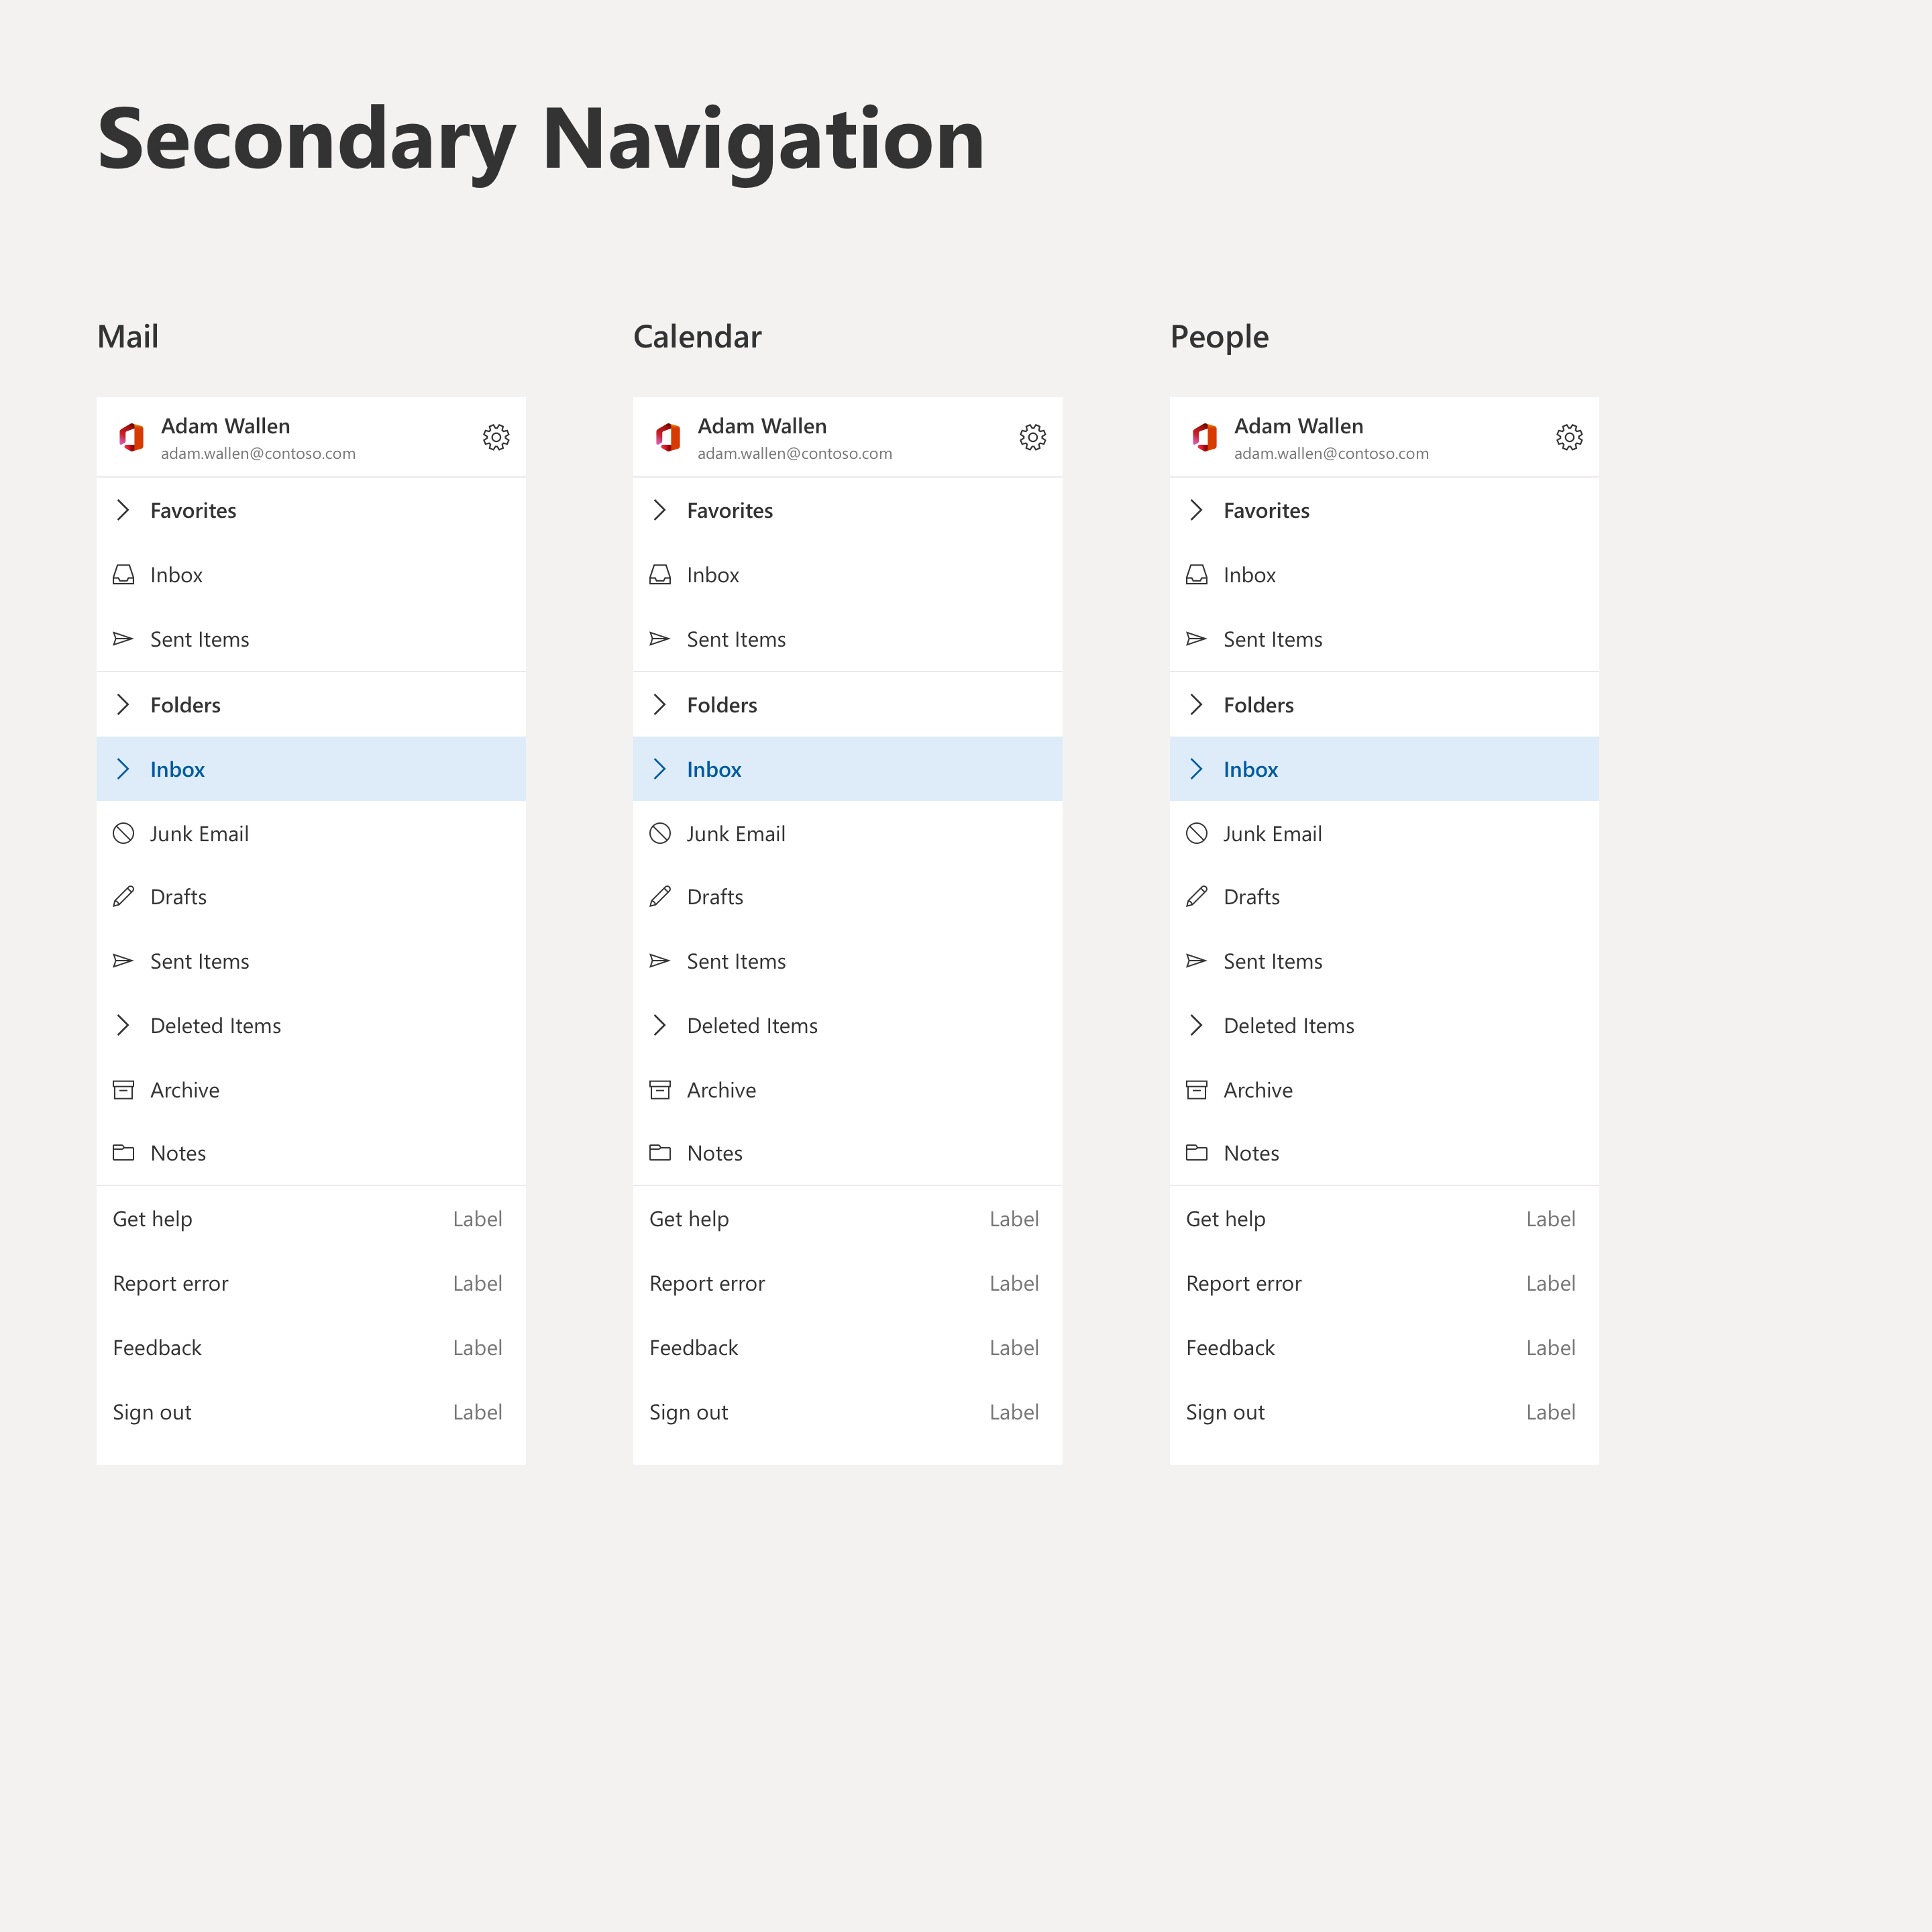 Outlook-Mobile-Web-Design-System-Secondary-Navigation-1